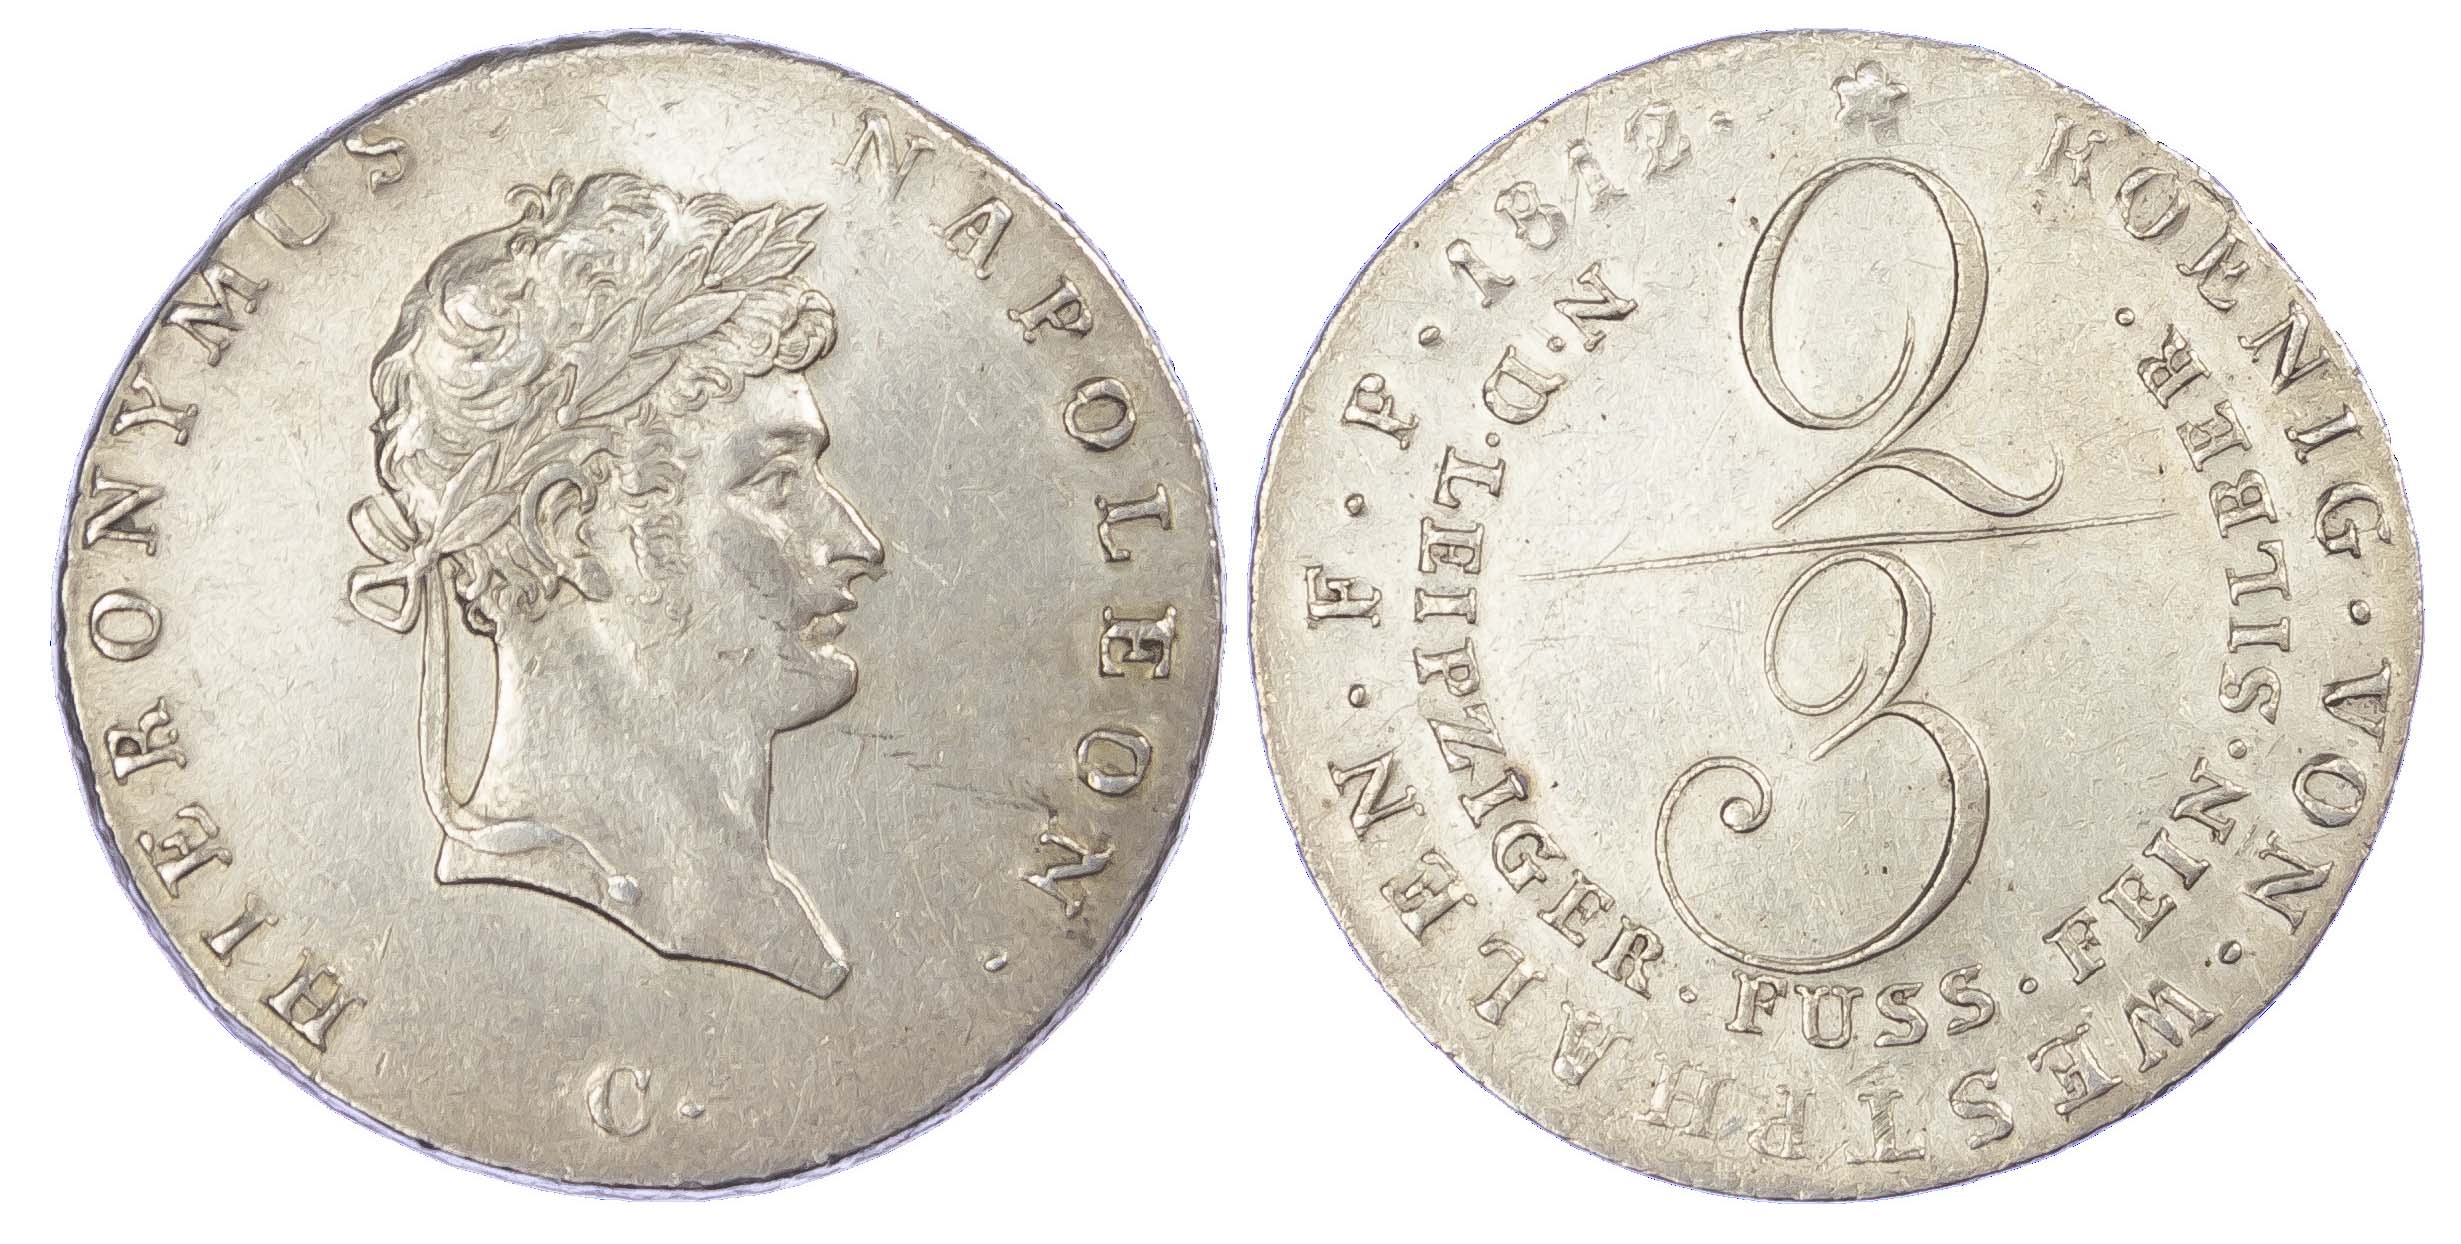 Germany, Westphalia, Hieronymus Napoleon (1807-1813), silver 2/3 Taler